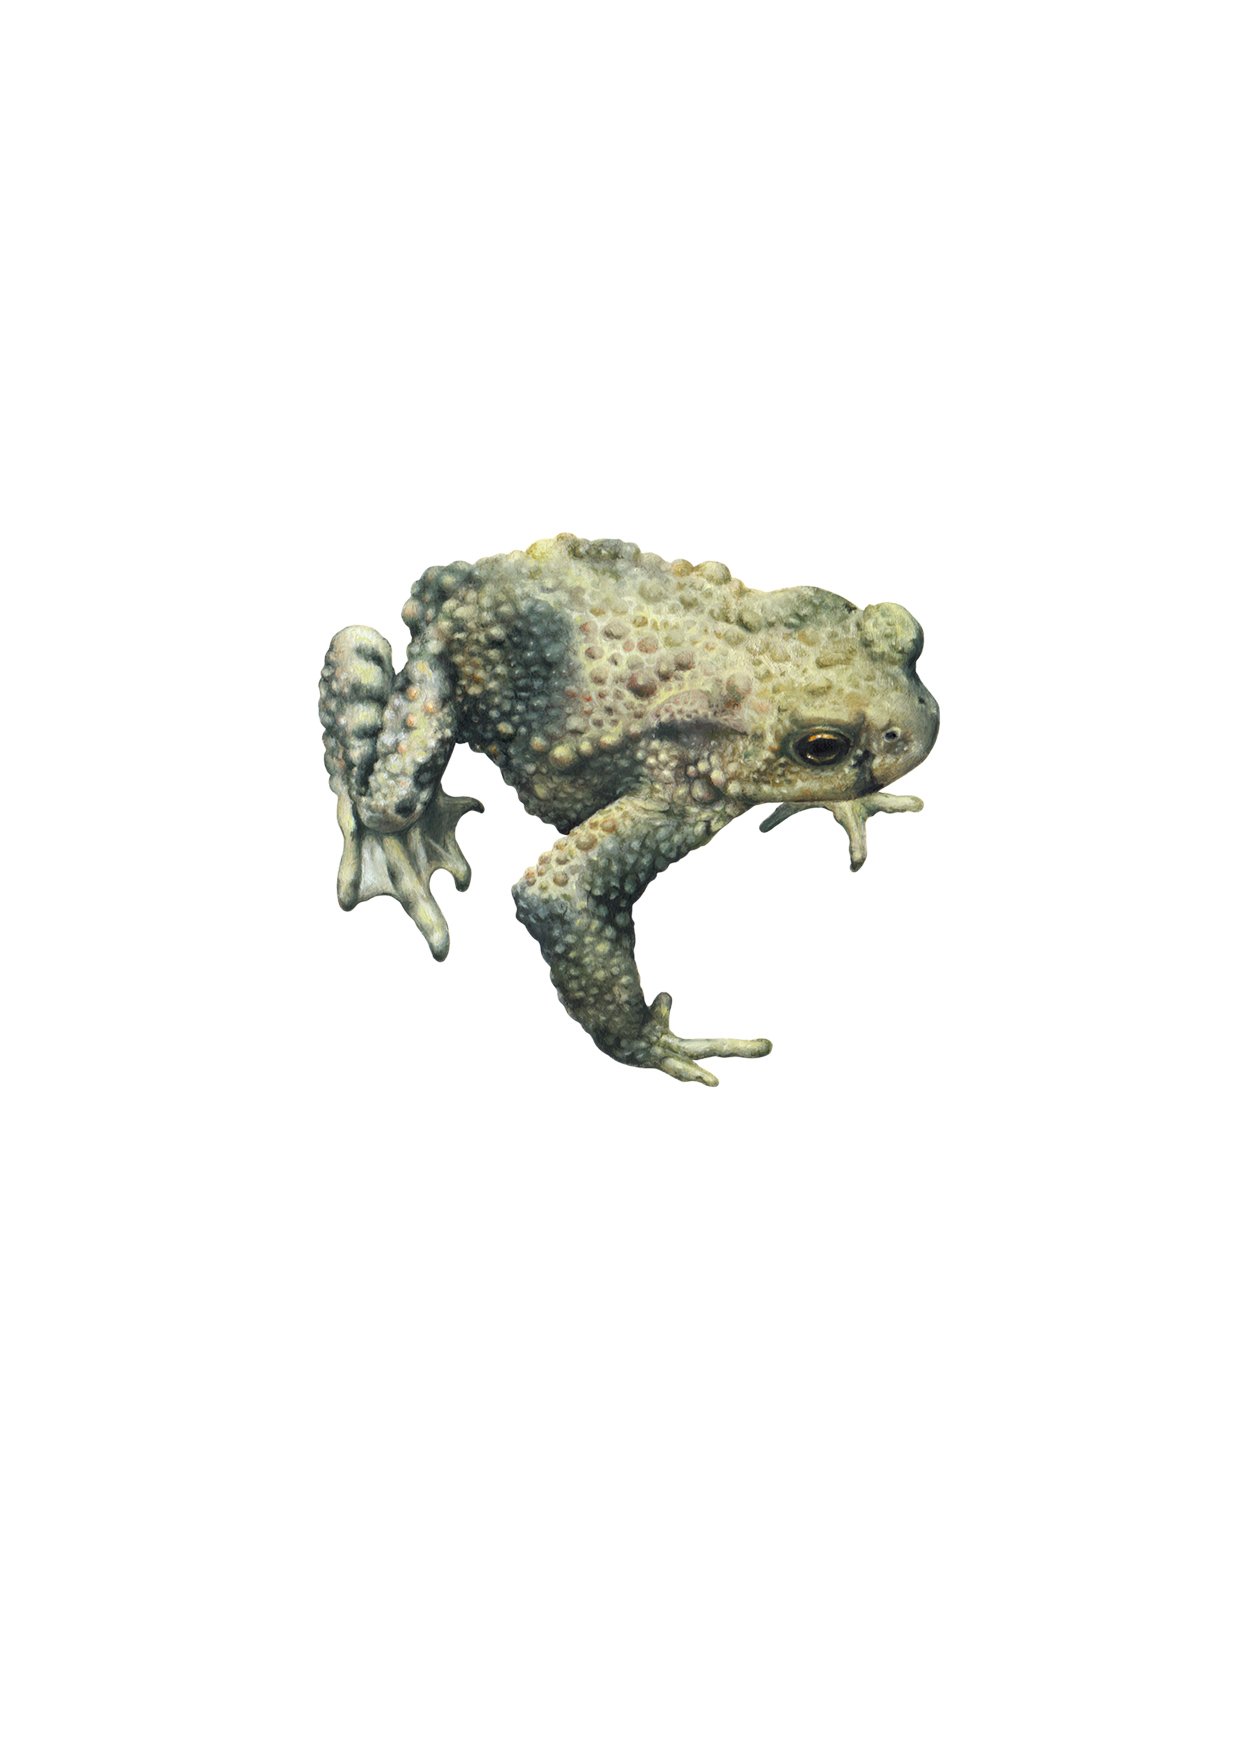 Frog - Oil on paper - 10.5 x 15.8cm